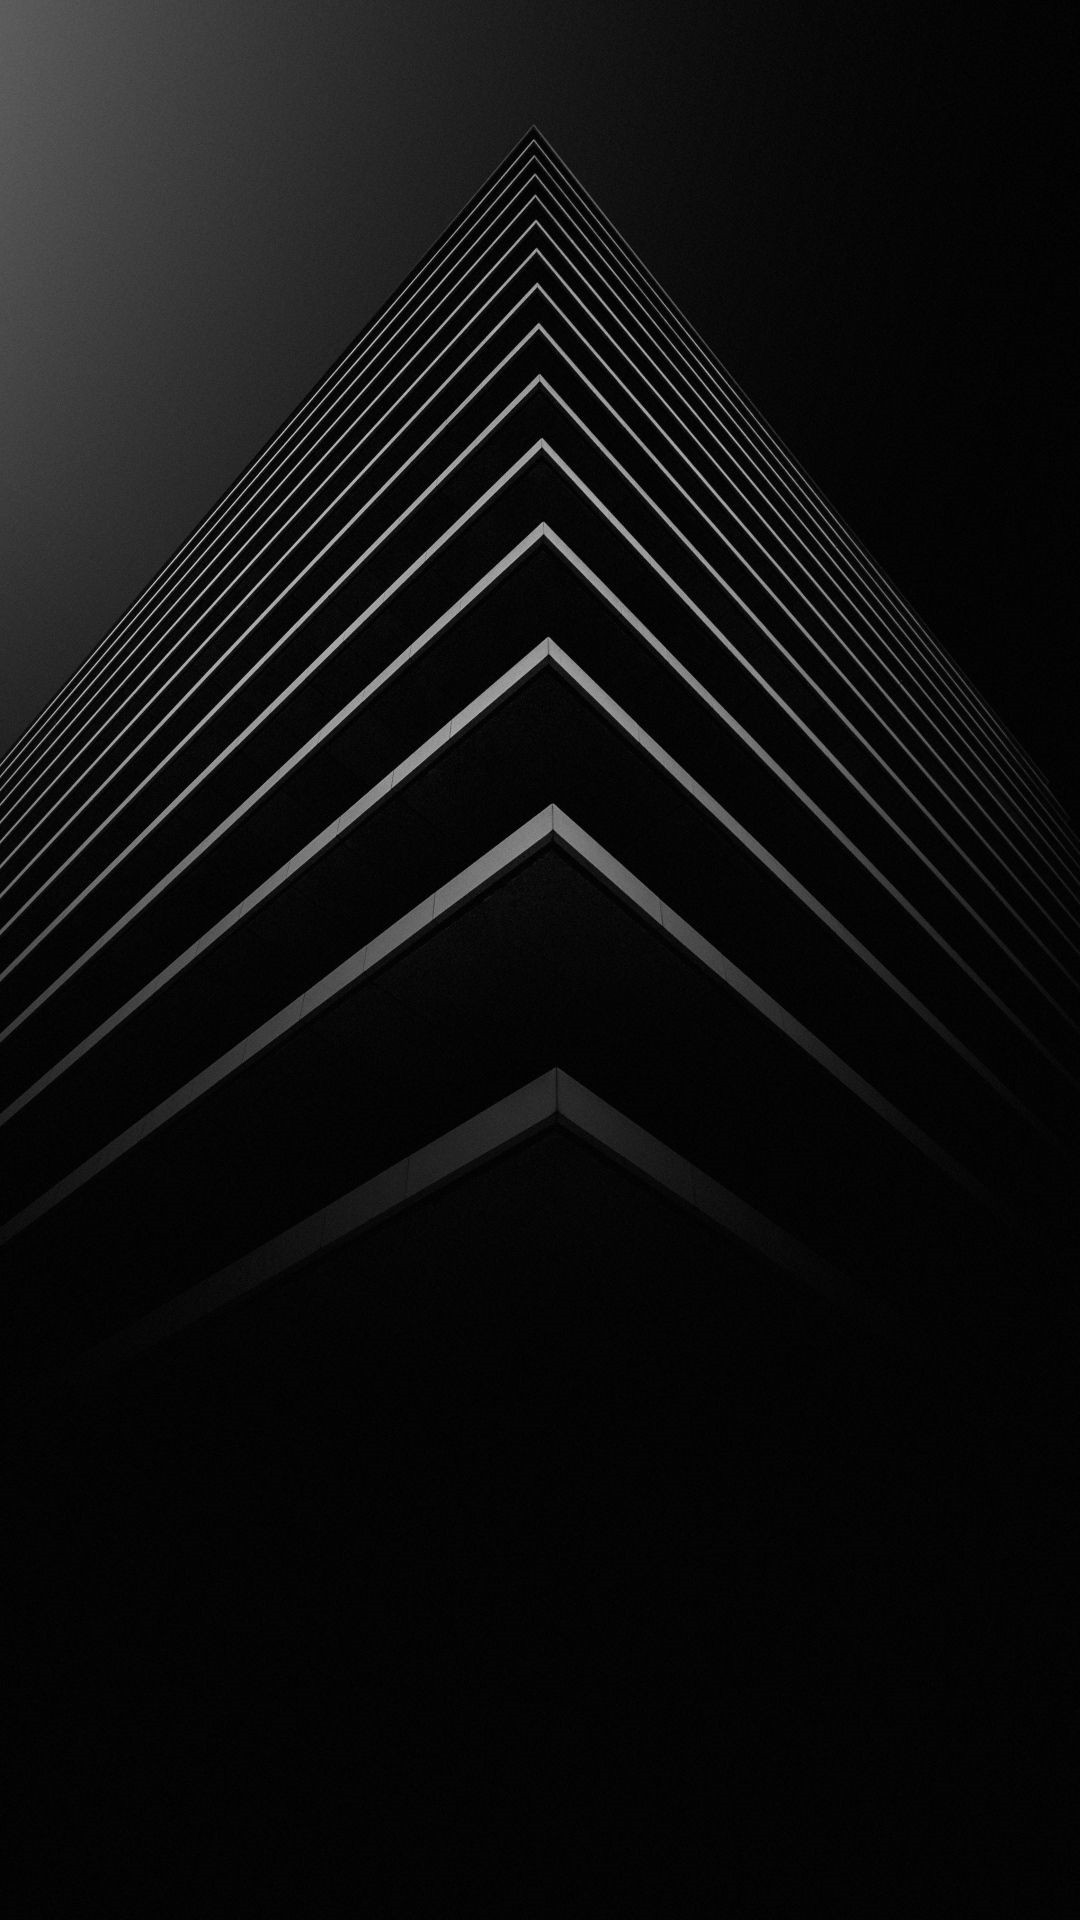 Black And White phone wallpaper